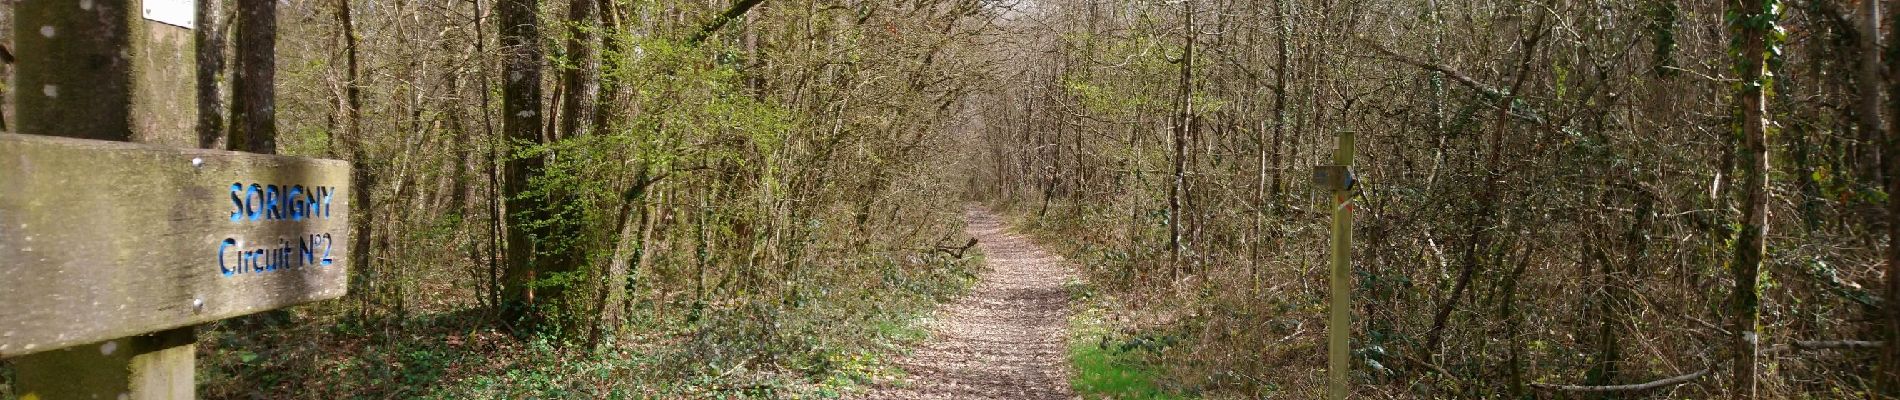 Trail Walking Sorigny - Sorigny - 10.6km 45m 2h10 - 2018 03 18 - Photo